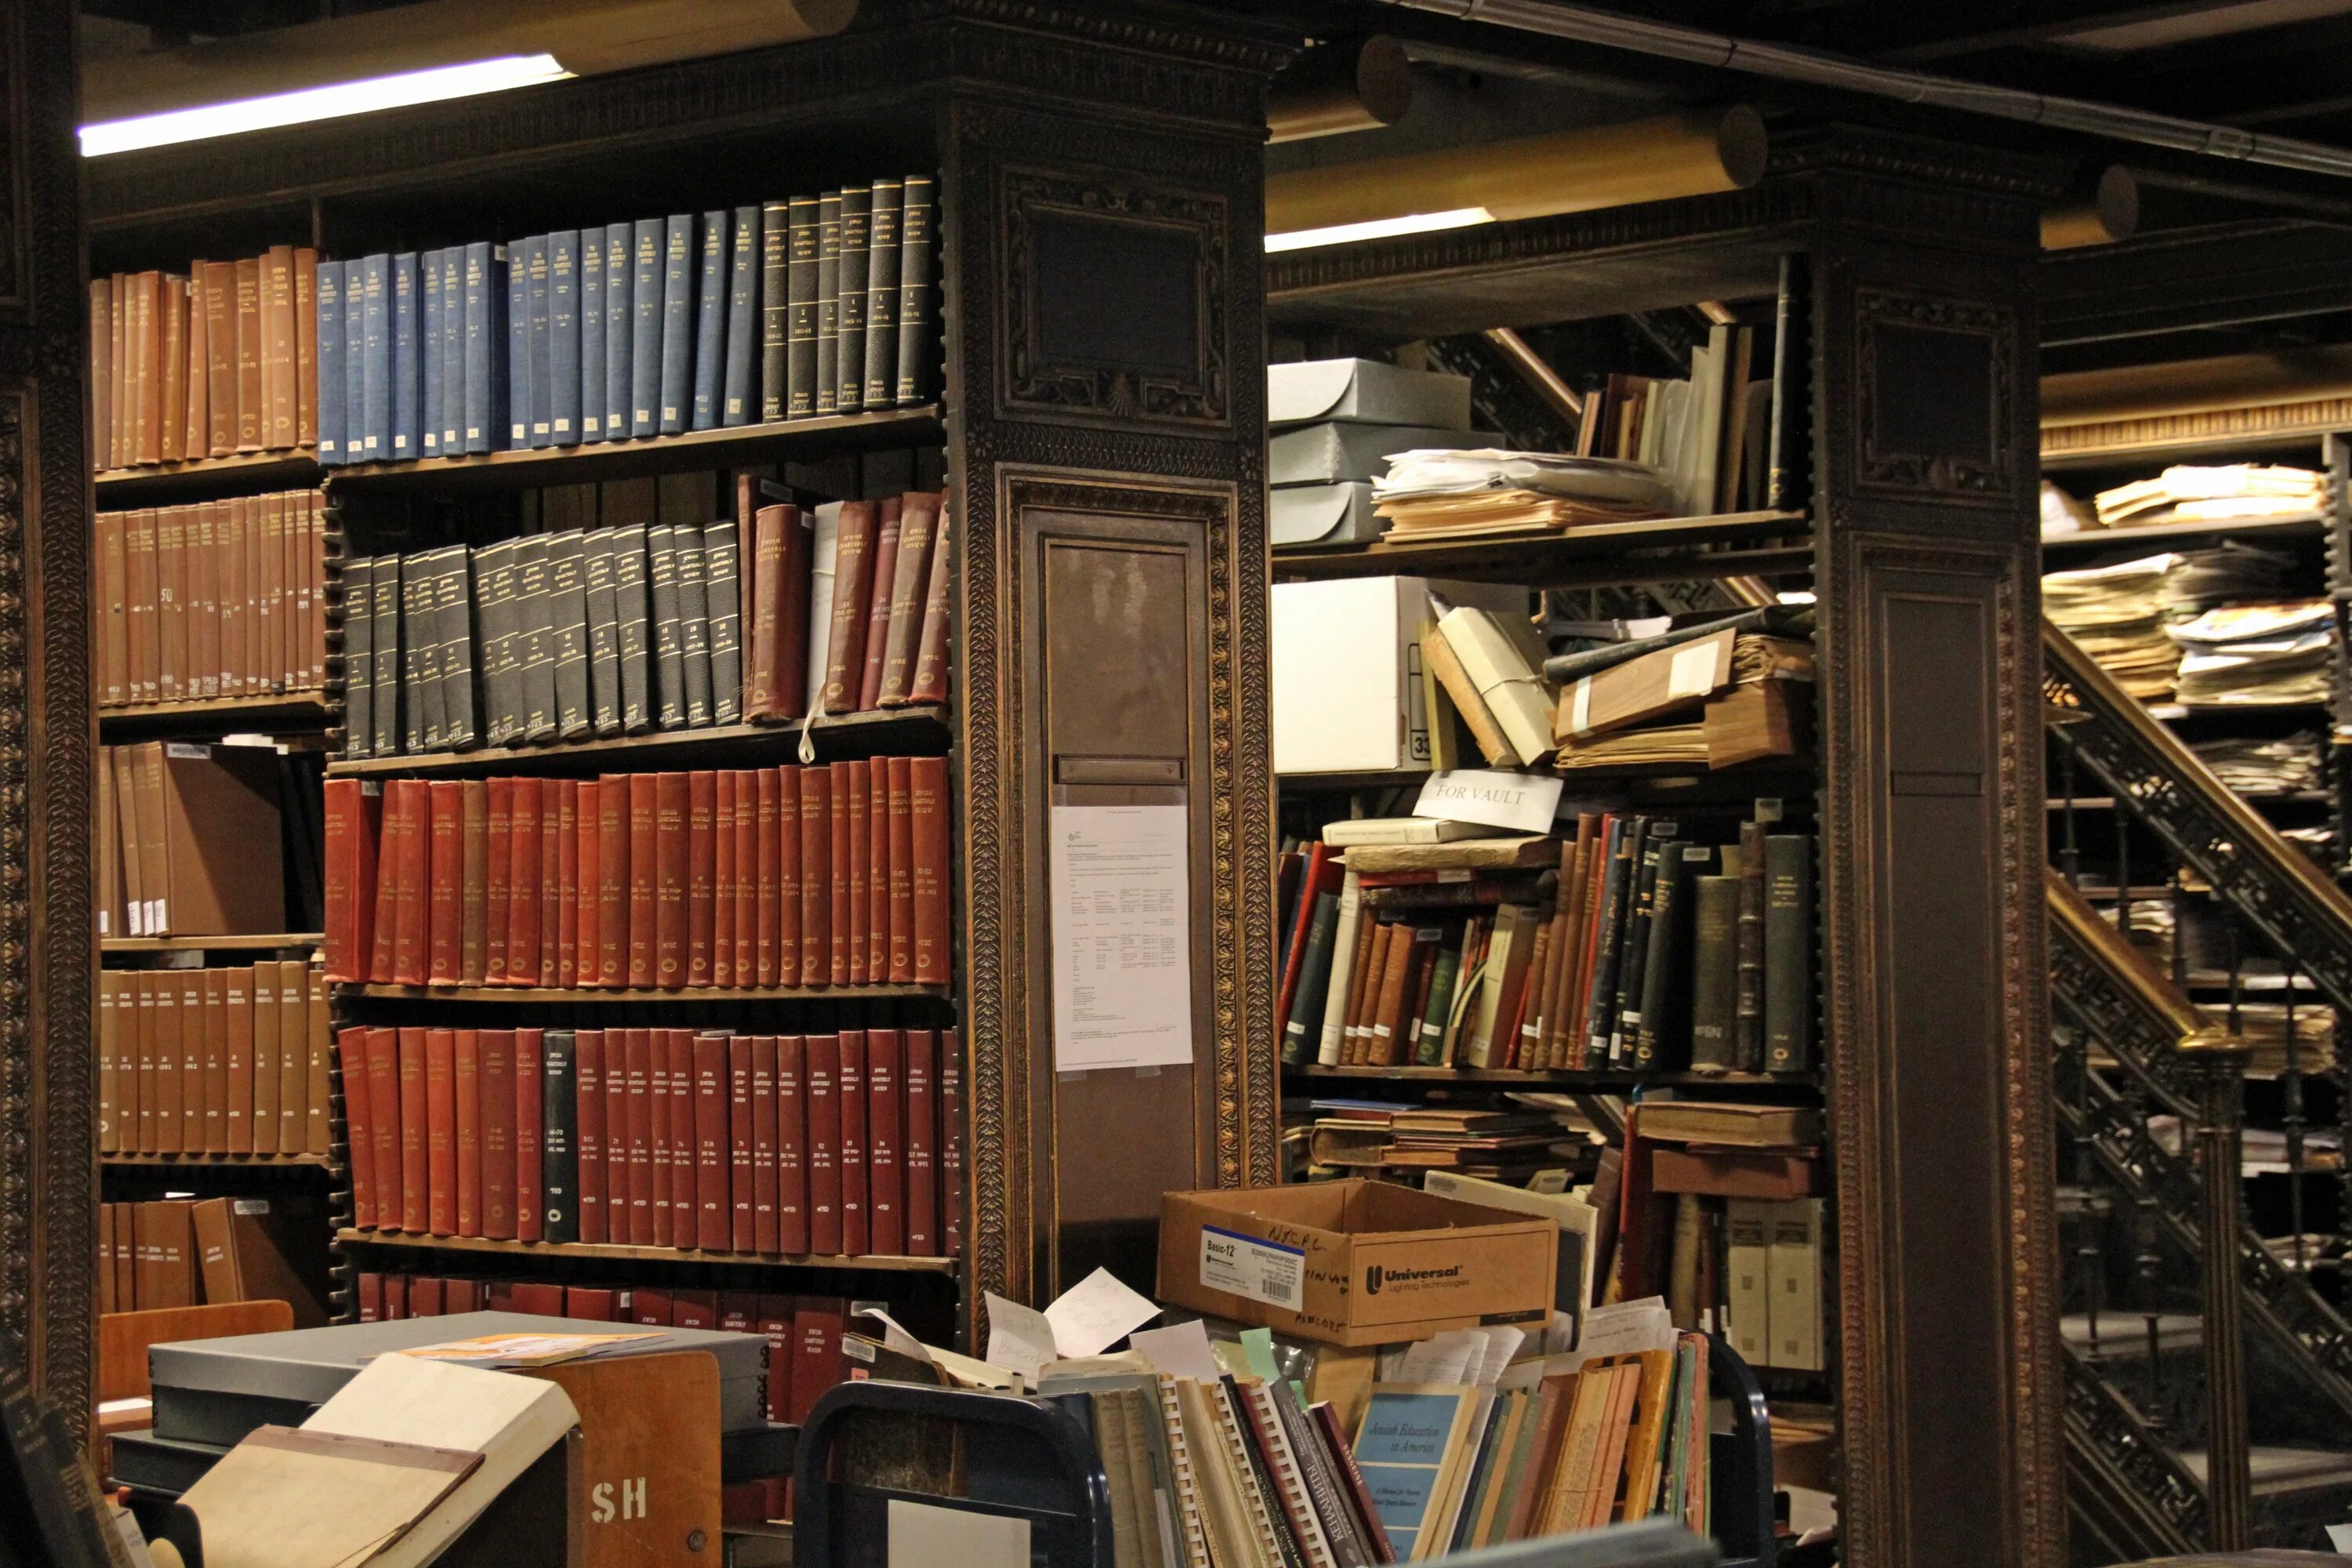 Библиотека архив 3. Шкаф для книг. Старый шкаф с книгами. Стеллажи для книг в библиотеку. Полка для книг.